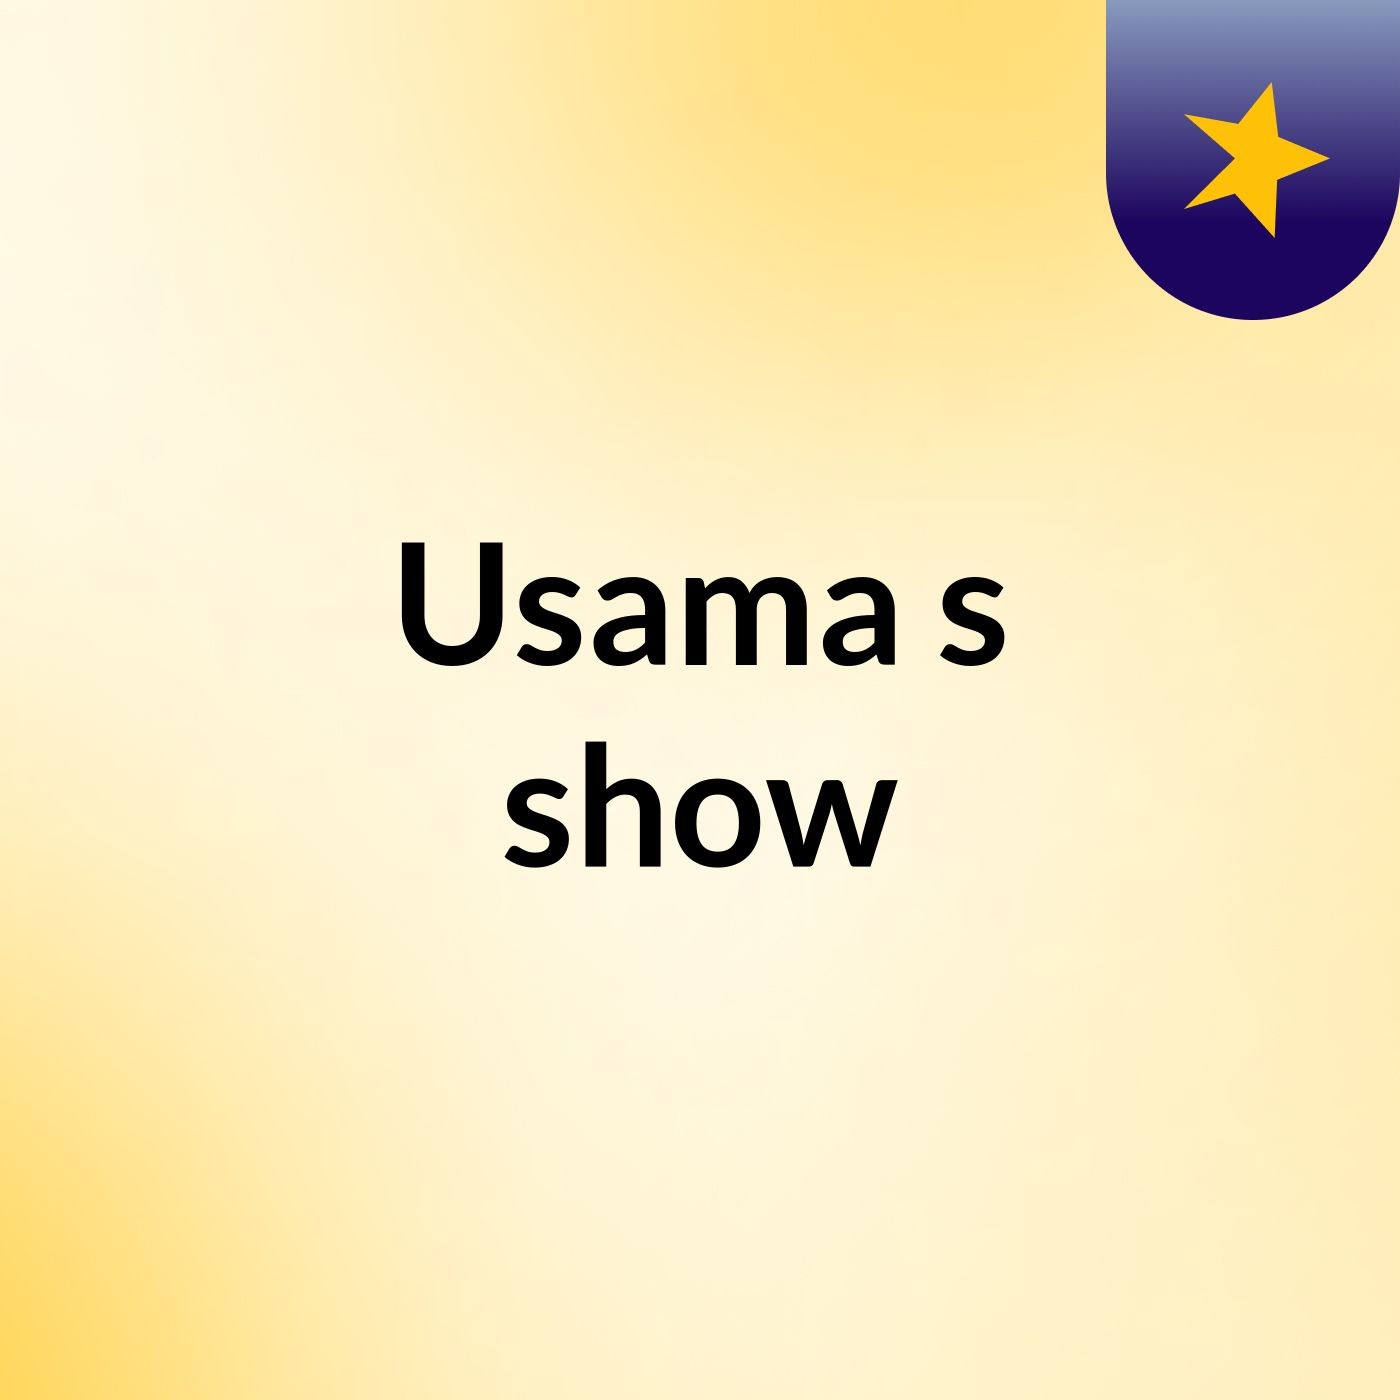 Usama's show